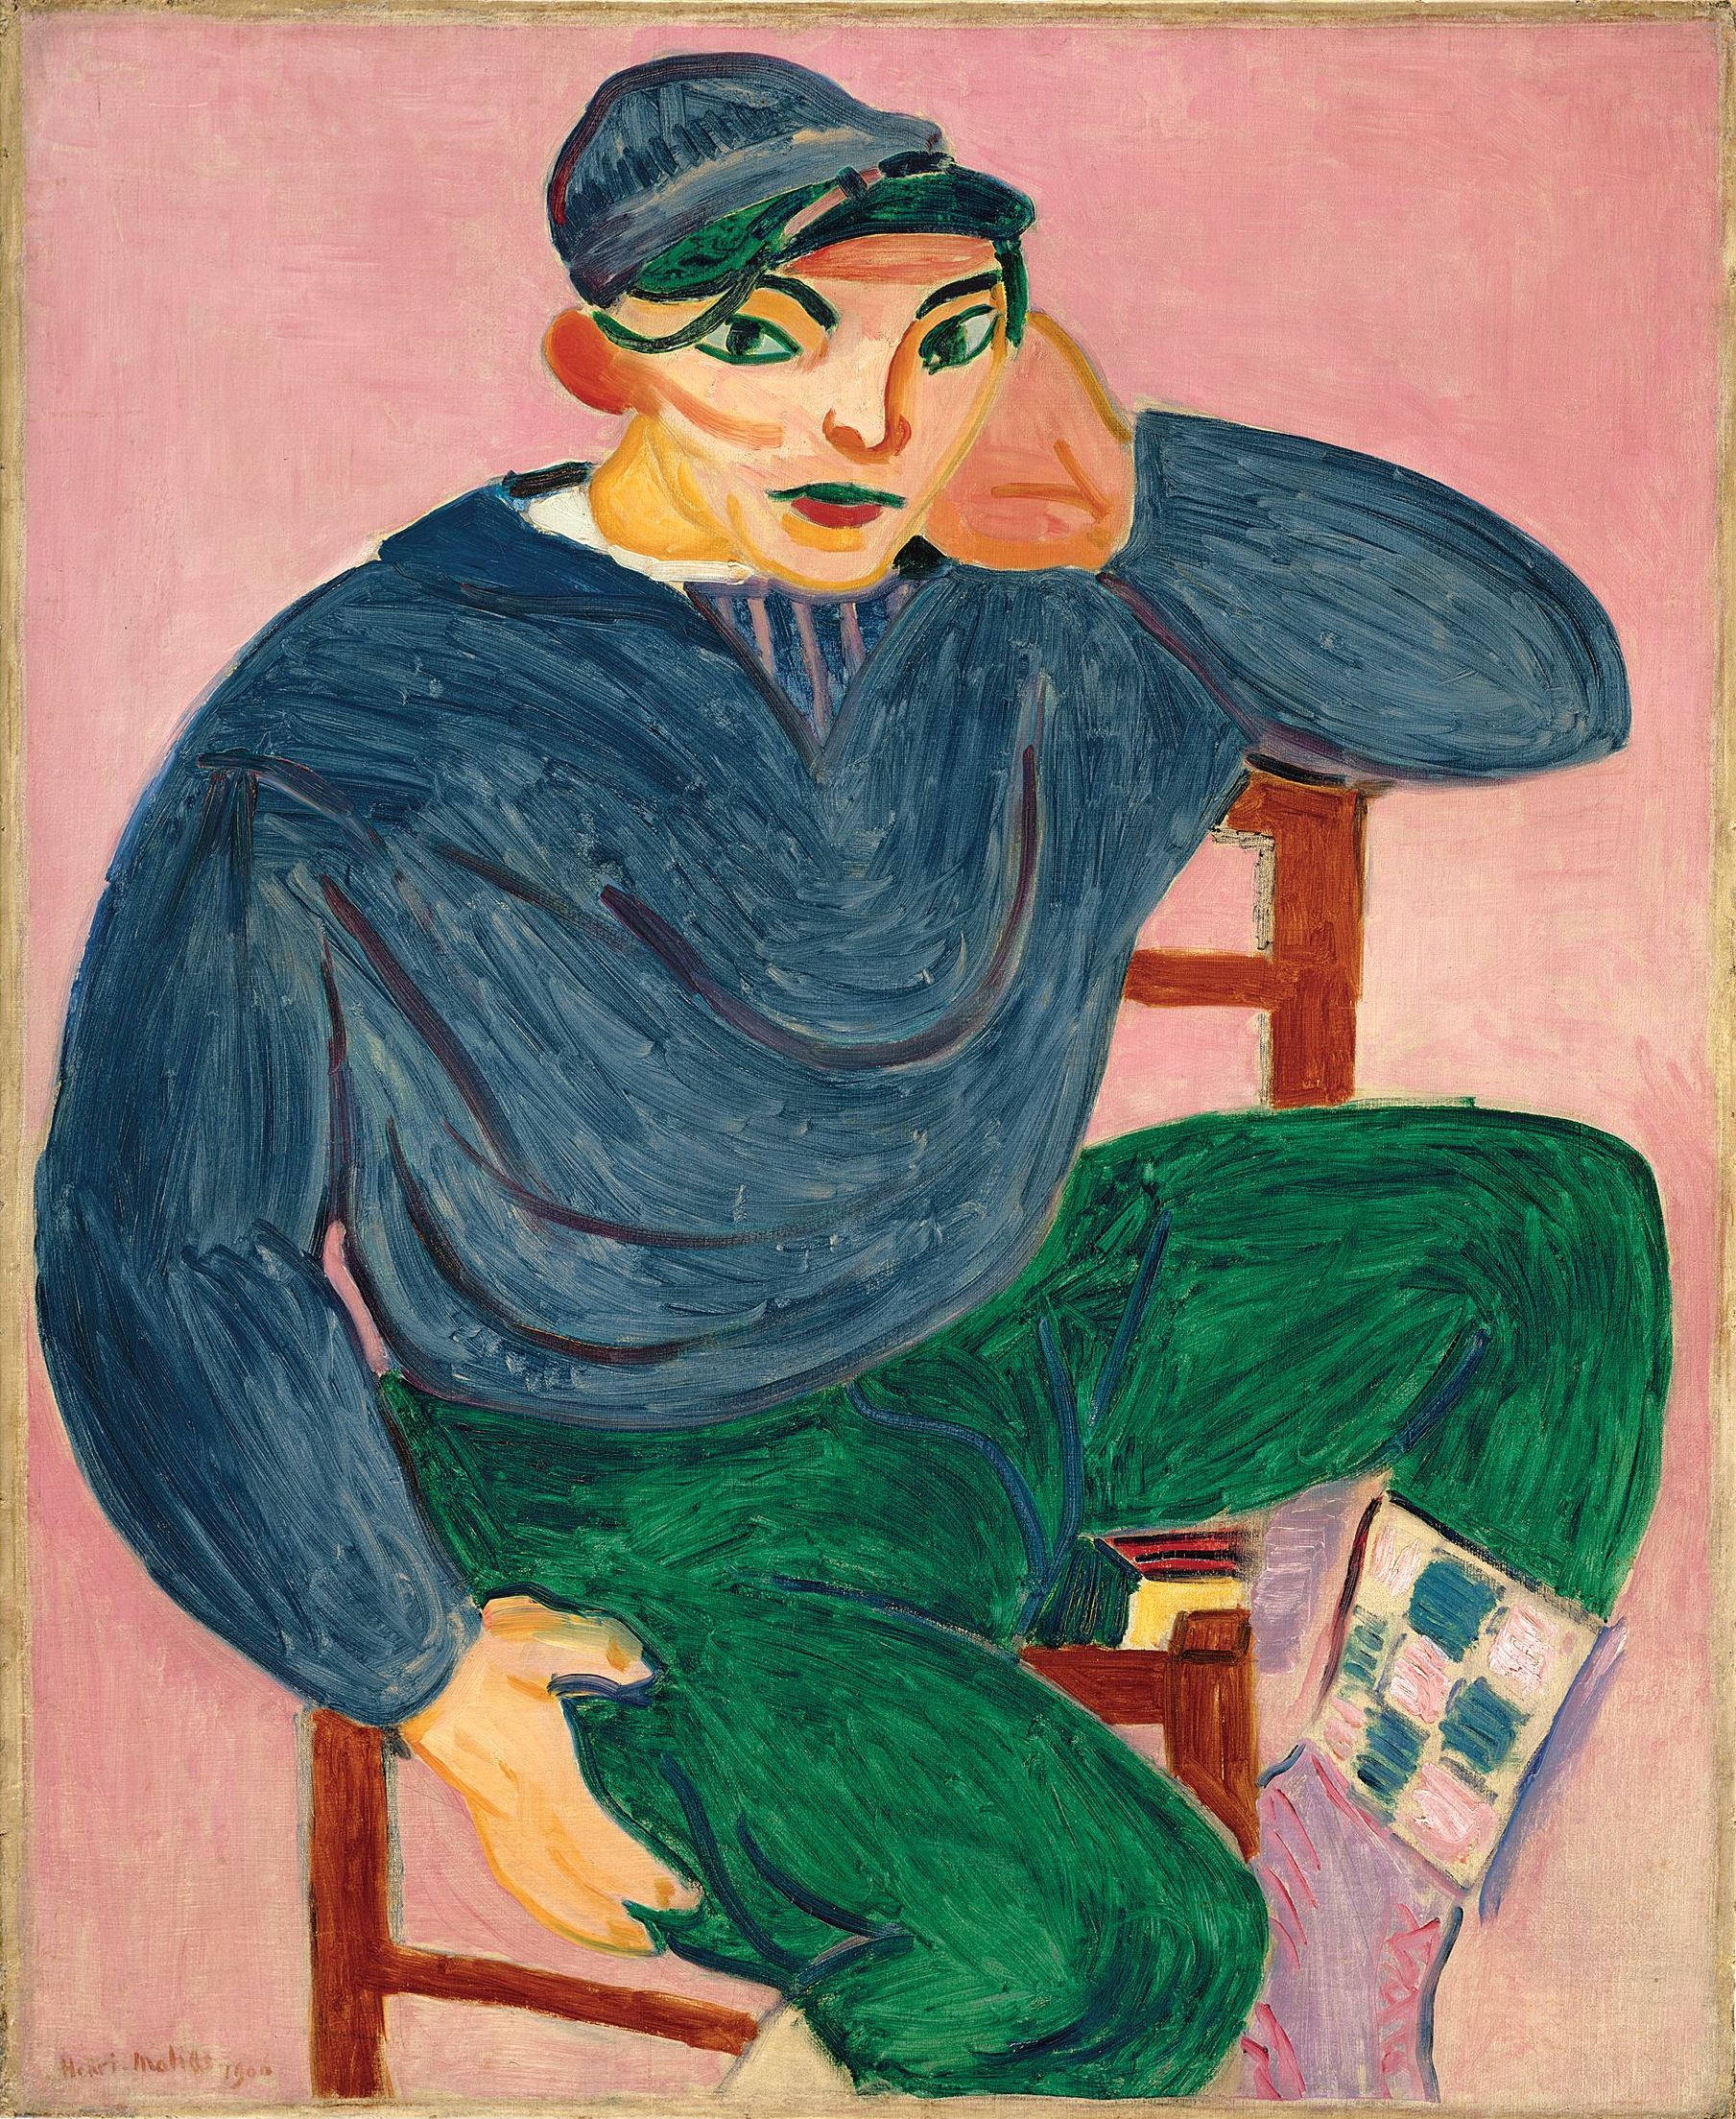 Matisse exhibit on view at the Met (37855)